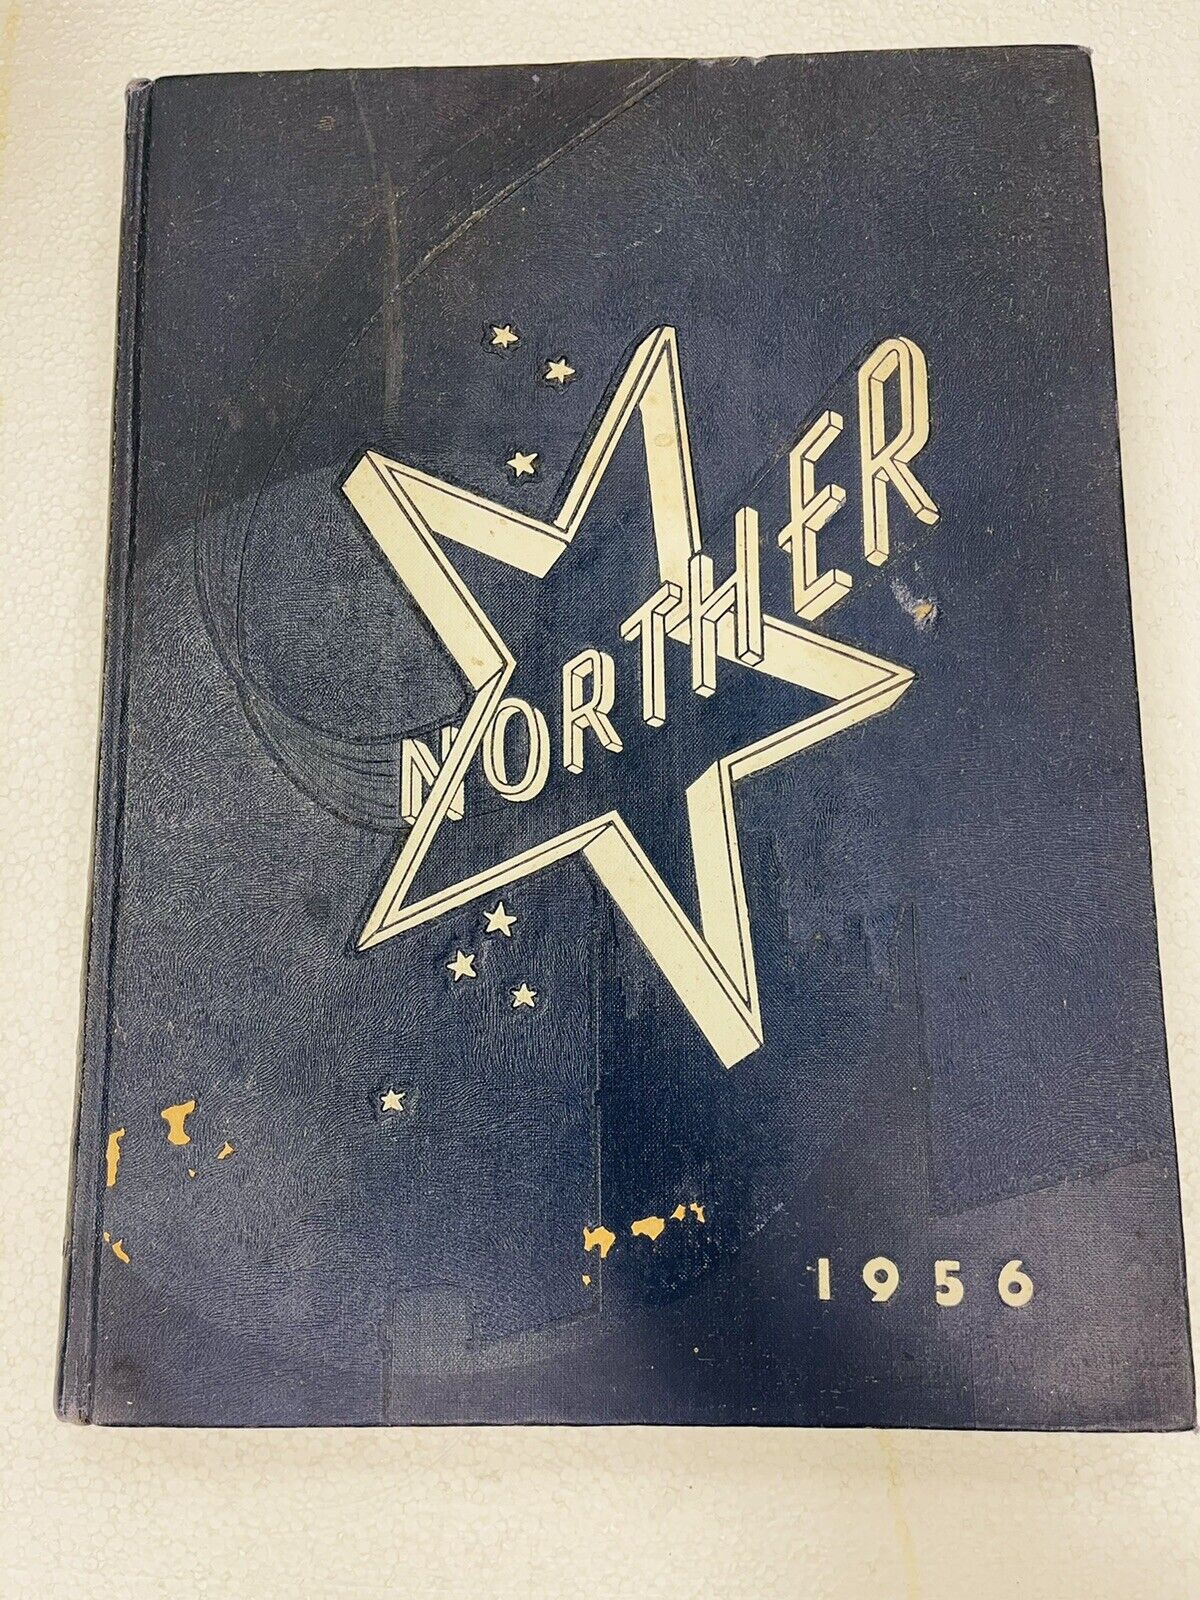 1956 NORTHER NORTHERN ILLINOIS UNIVERSITY YEARBOOK DEKALB